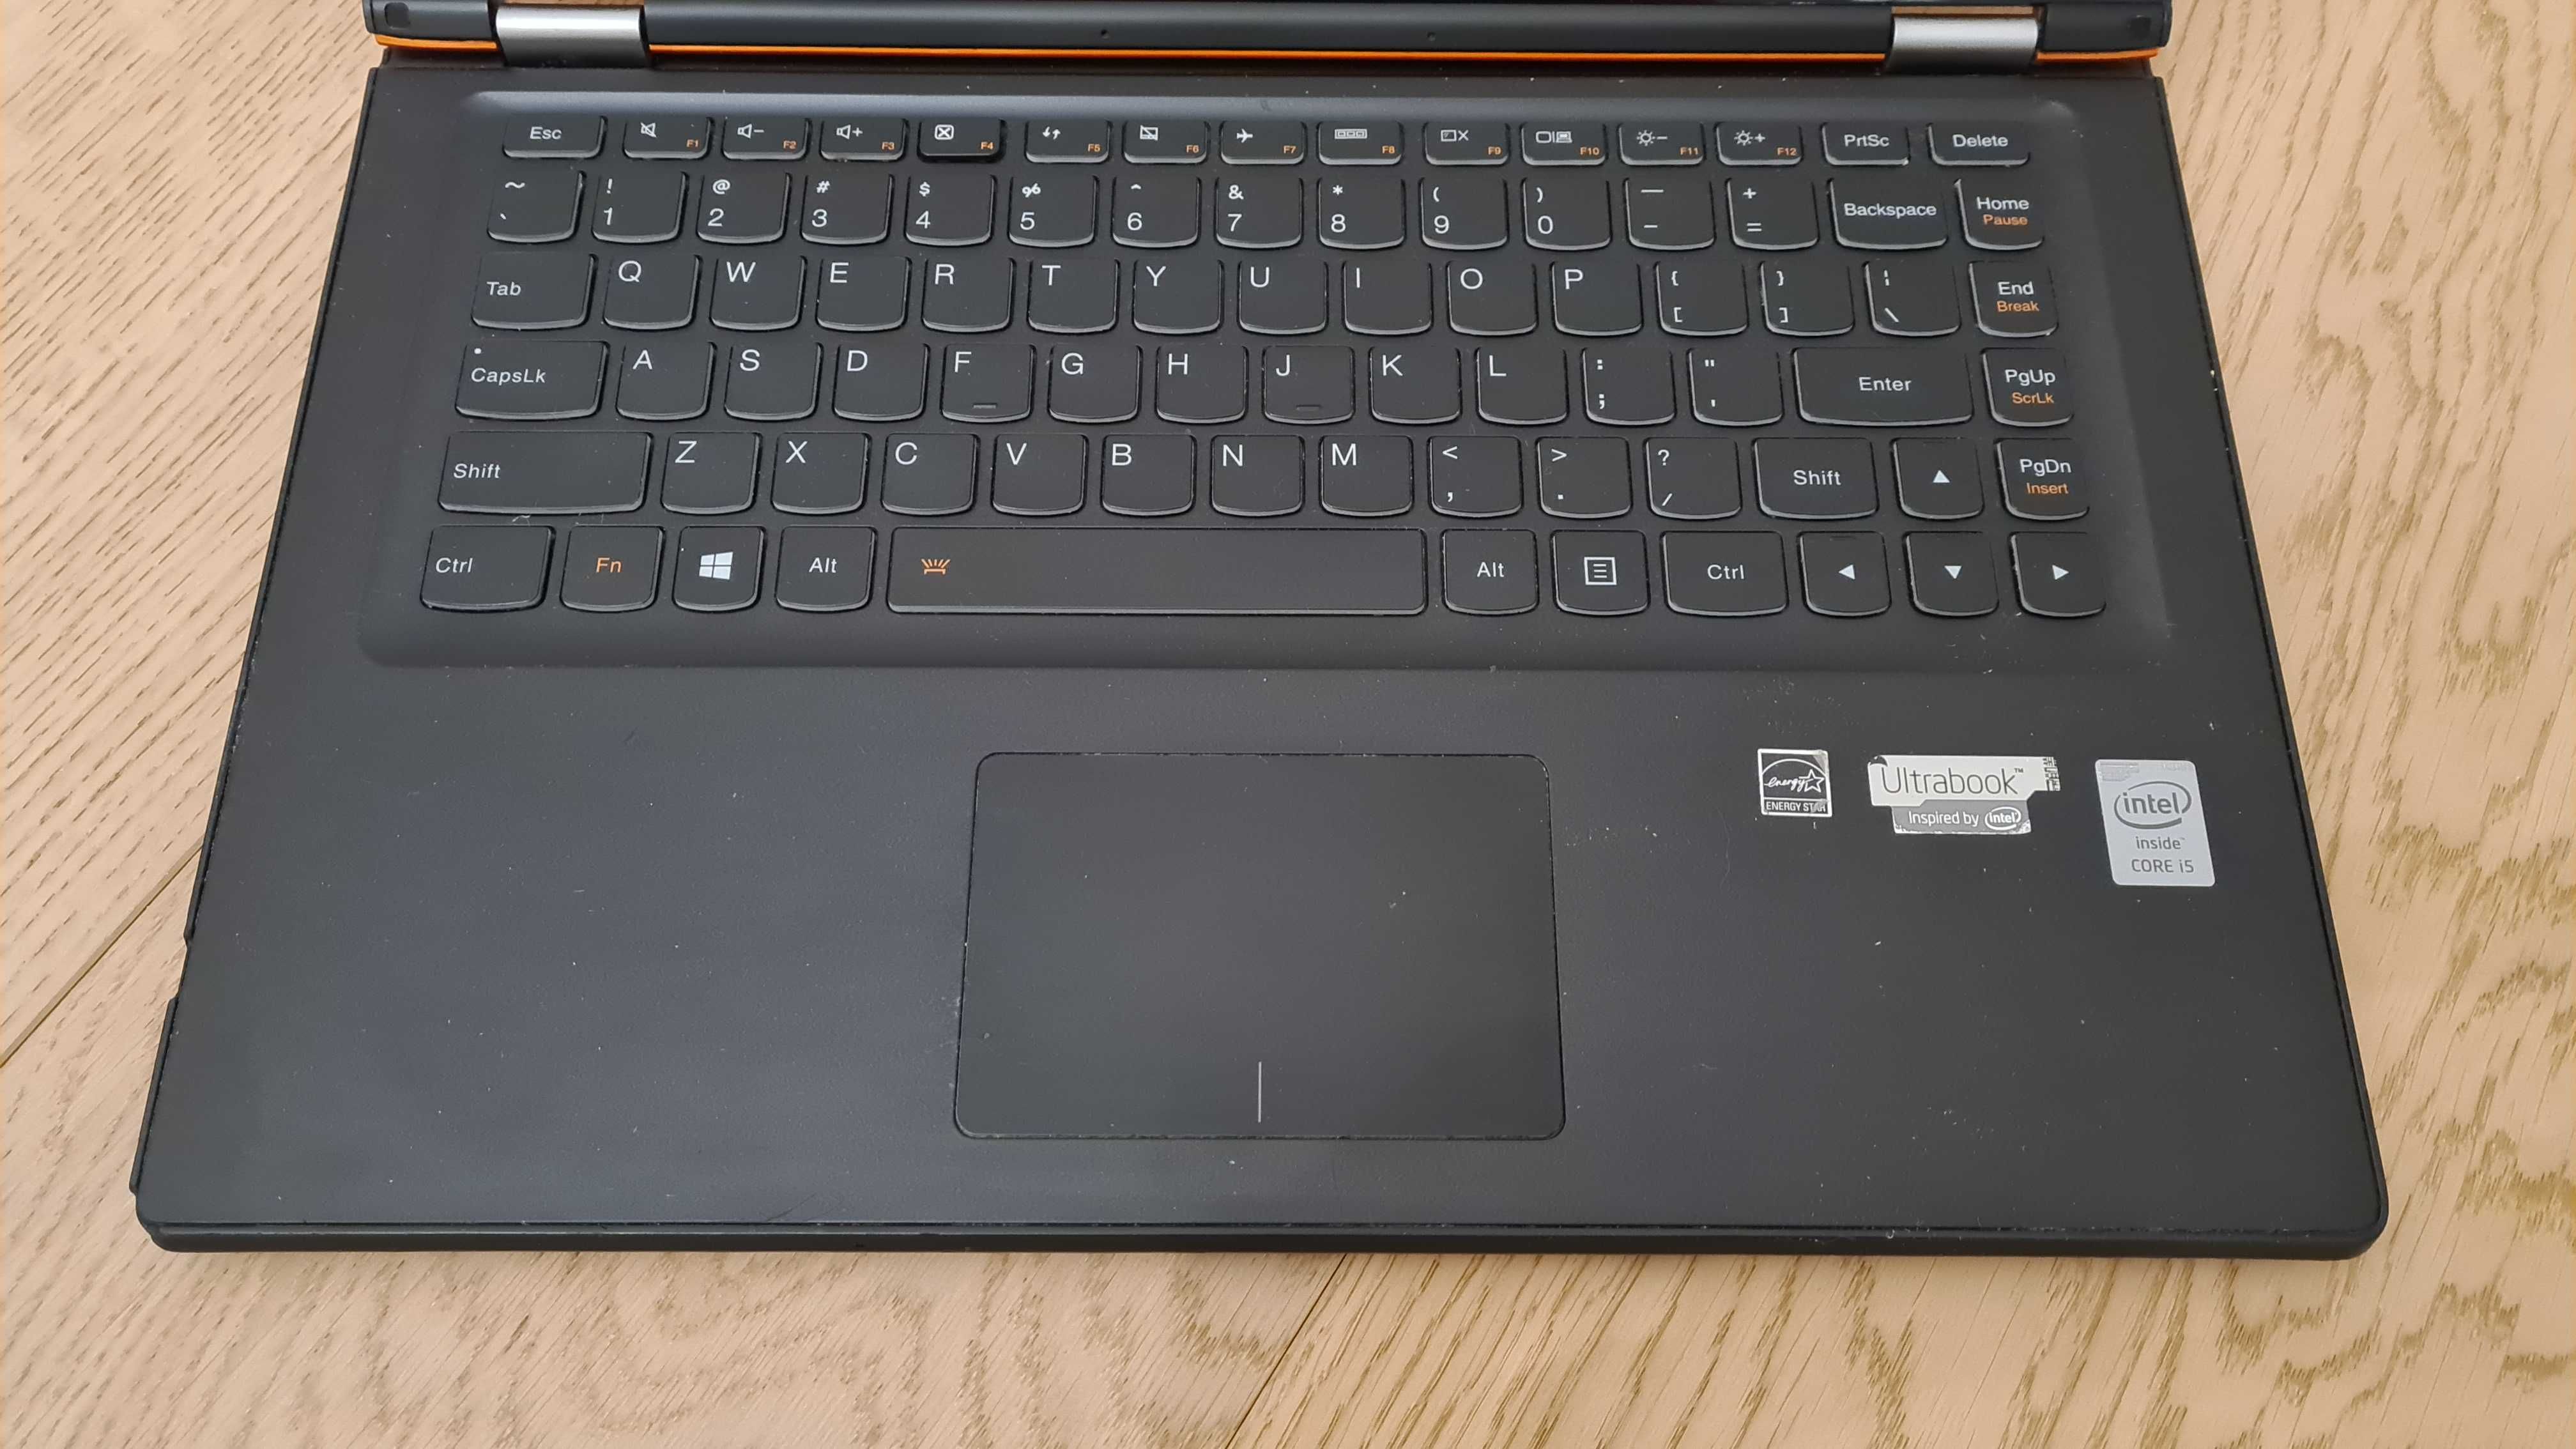 Laptop Lenovo Yoga 2 13 model 20344, i5, 500GB, 4GB RAM, Ultrabook